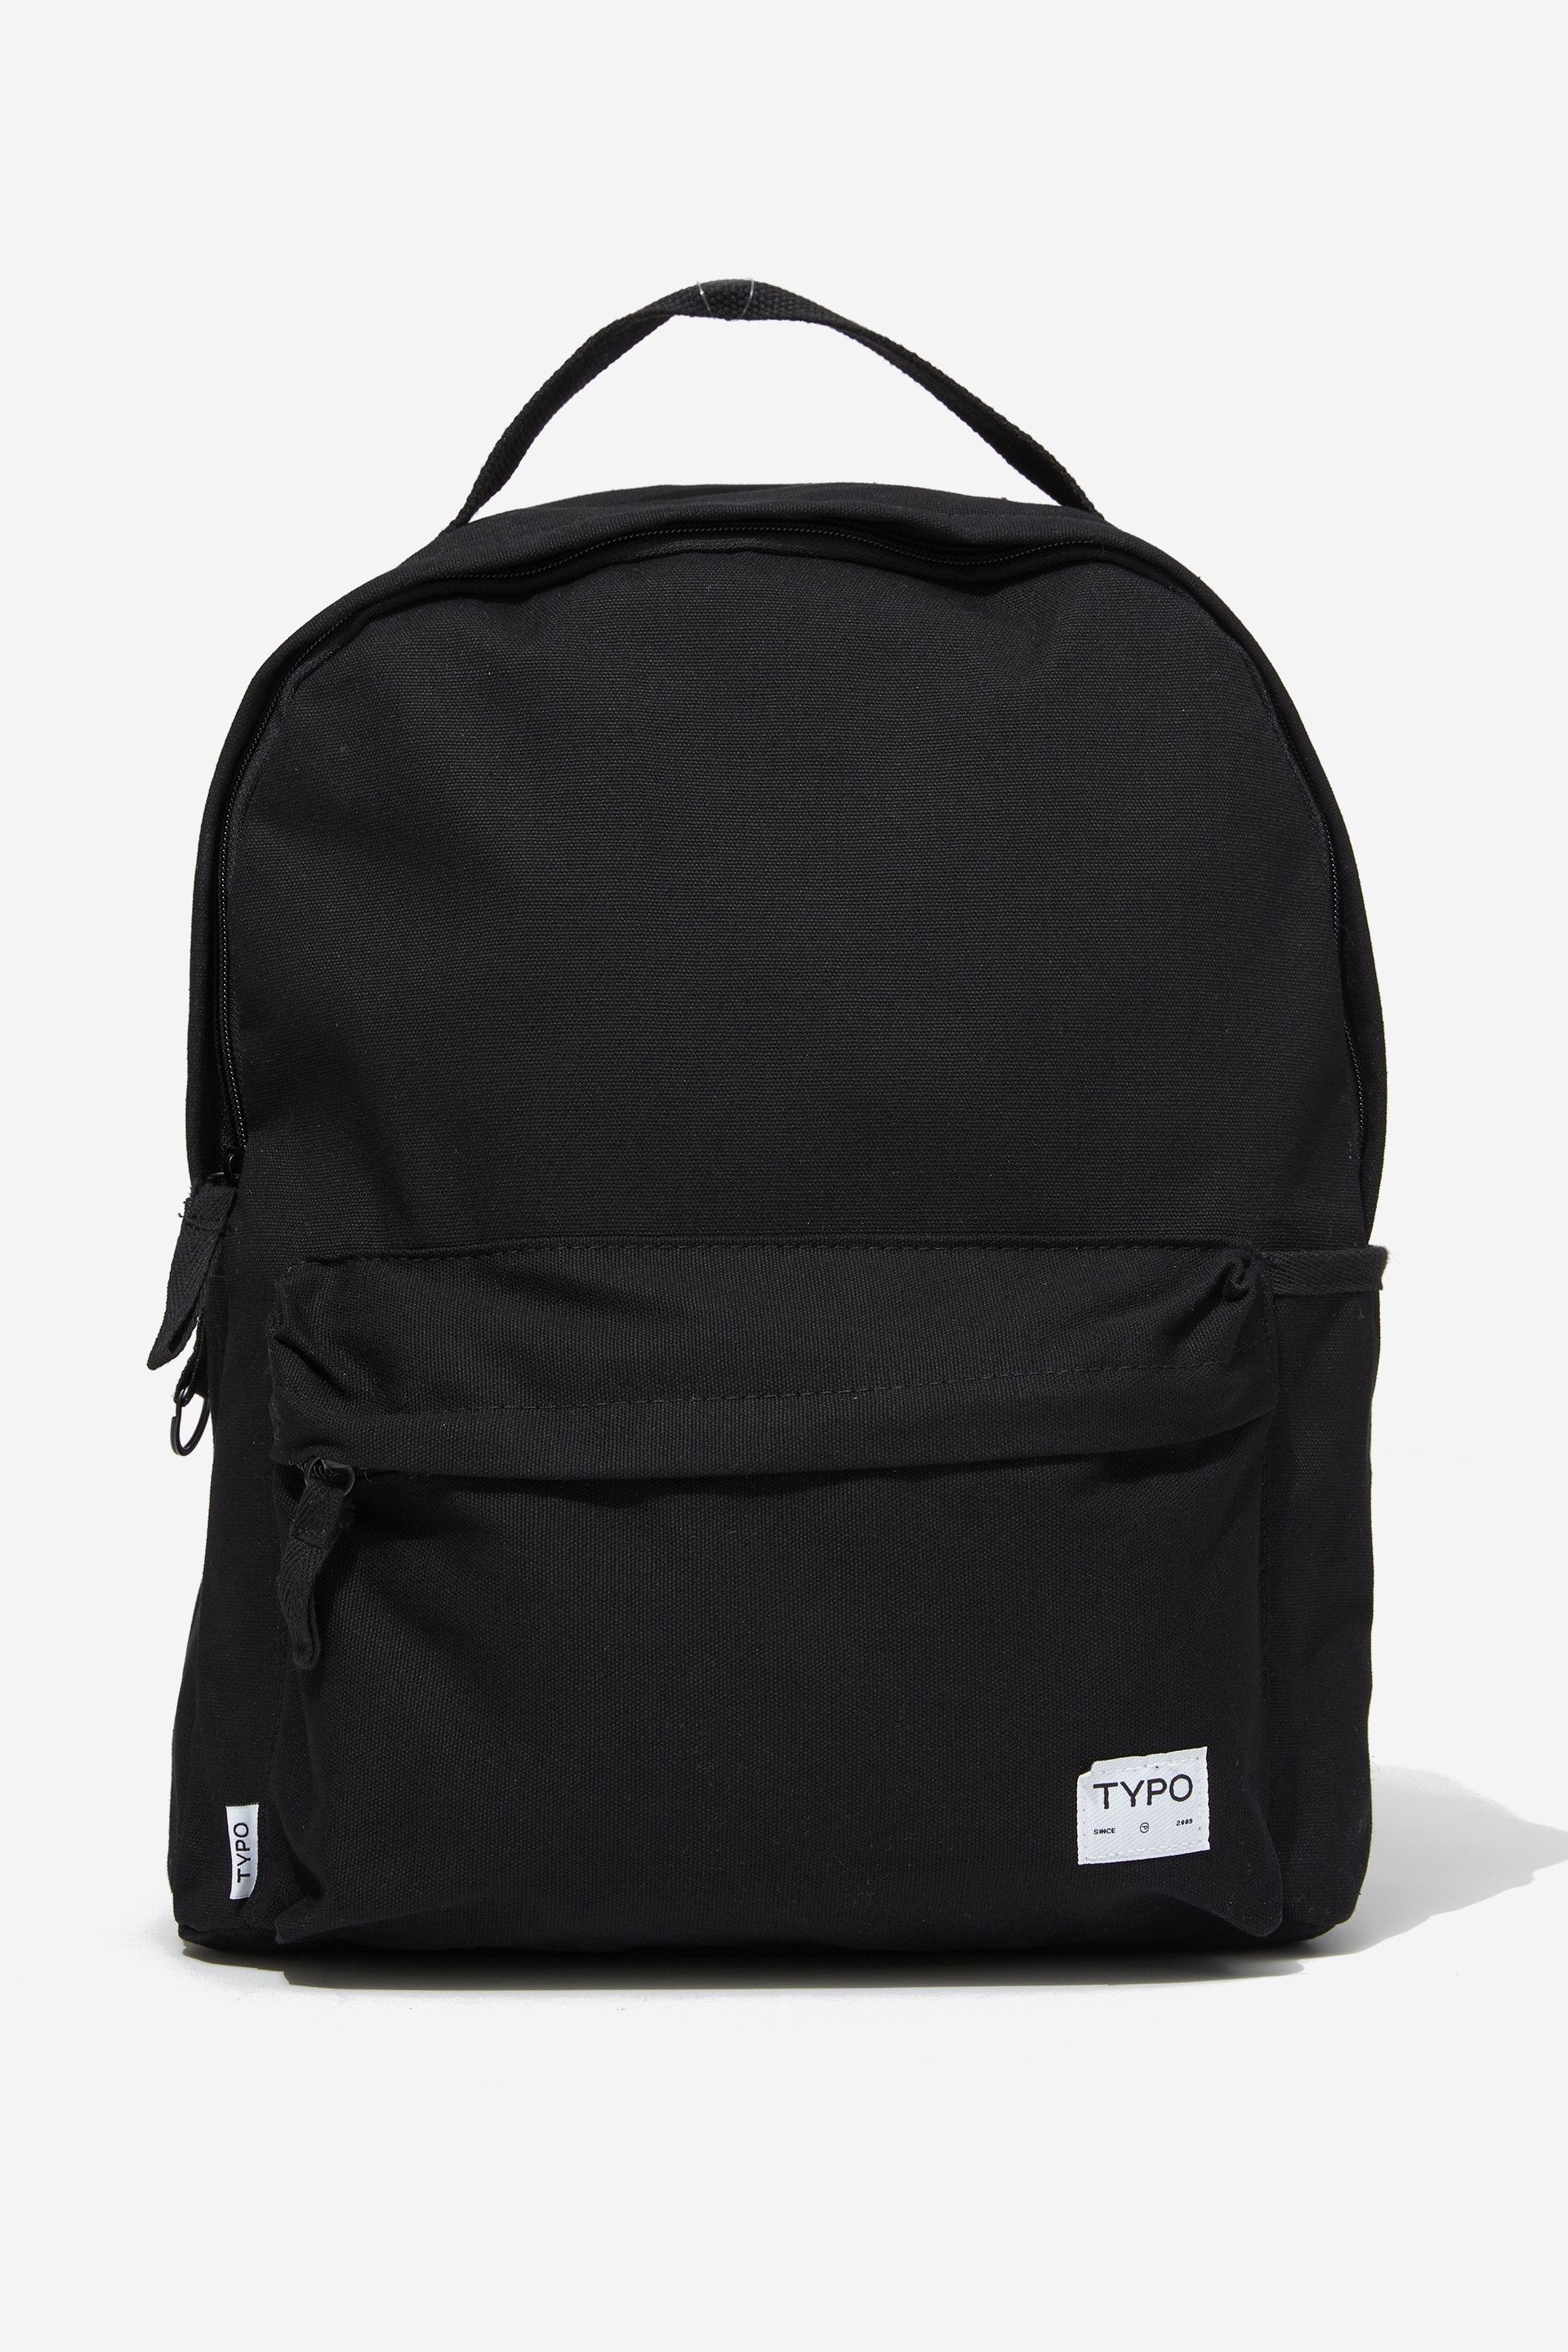 Typo - Alumni Backpack - Solid black